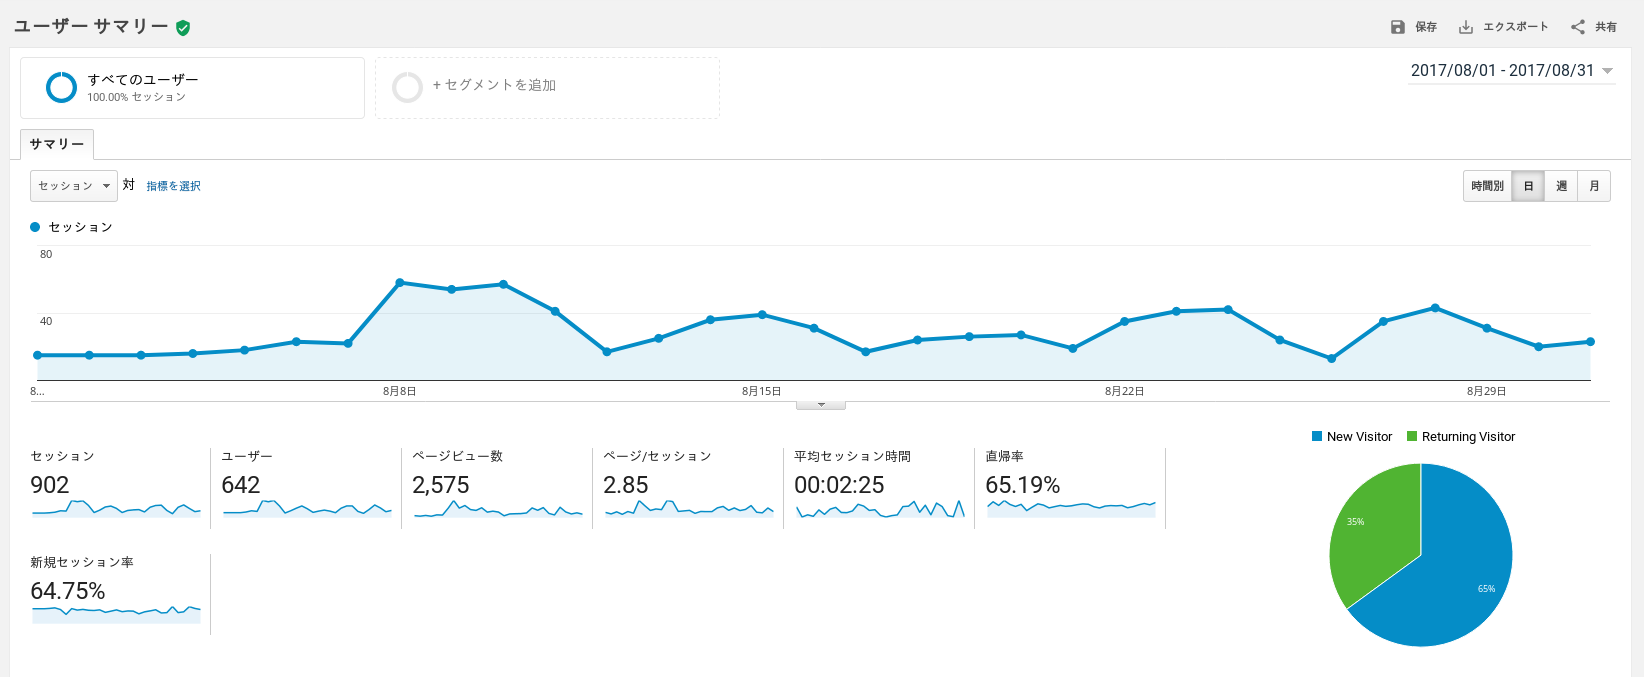 Google Analytics Dashboard for Koipun